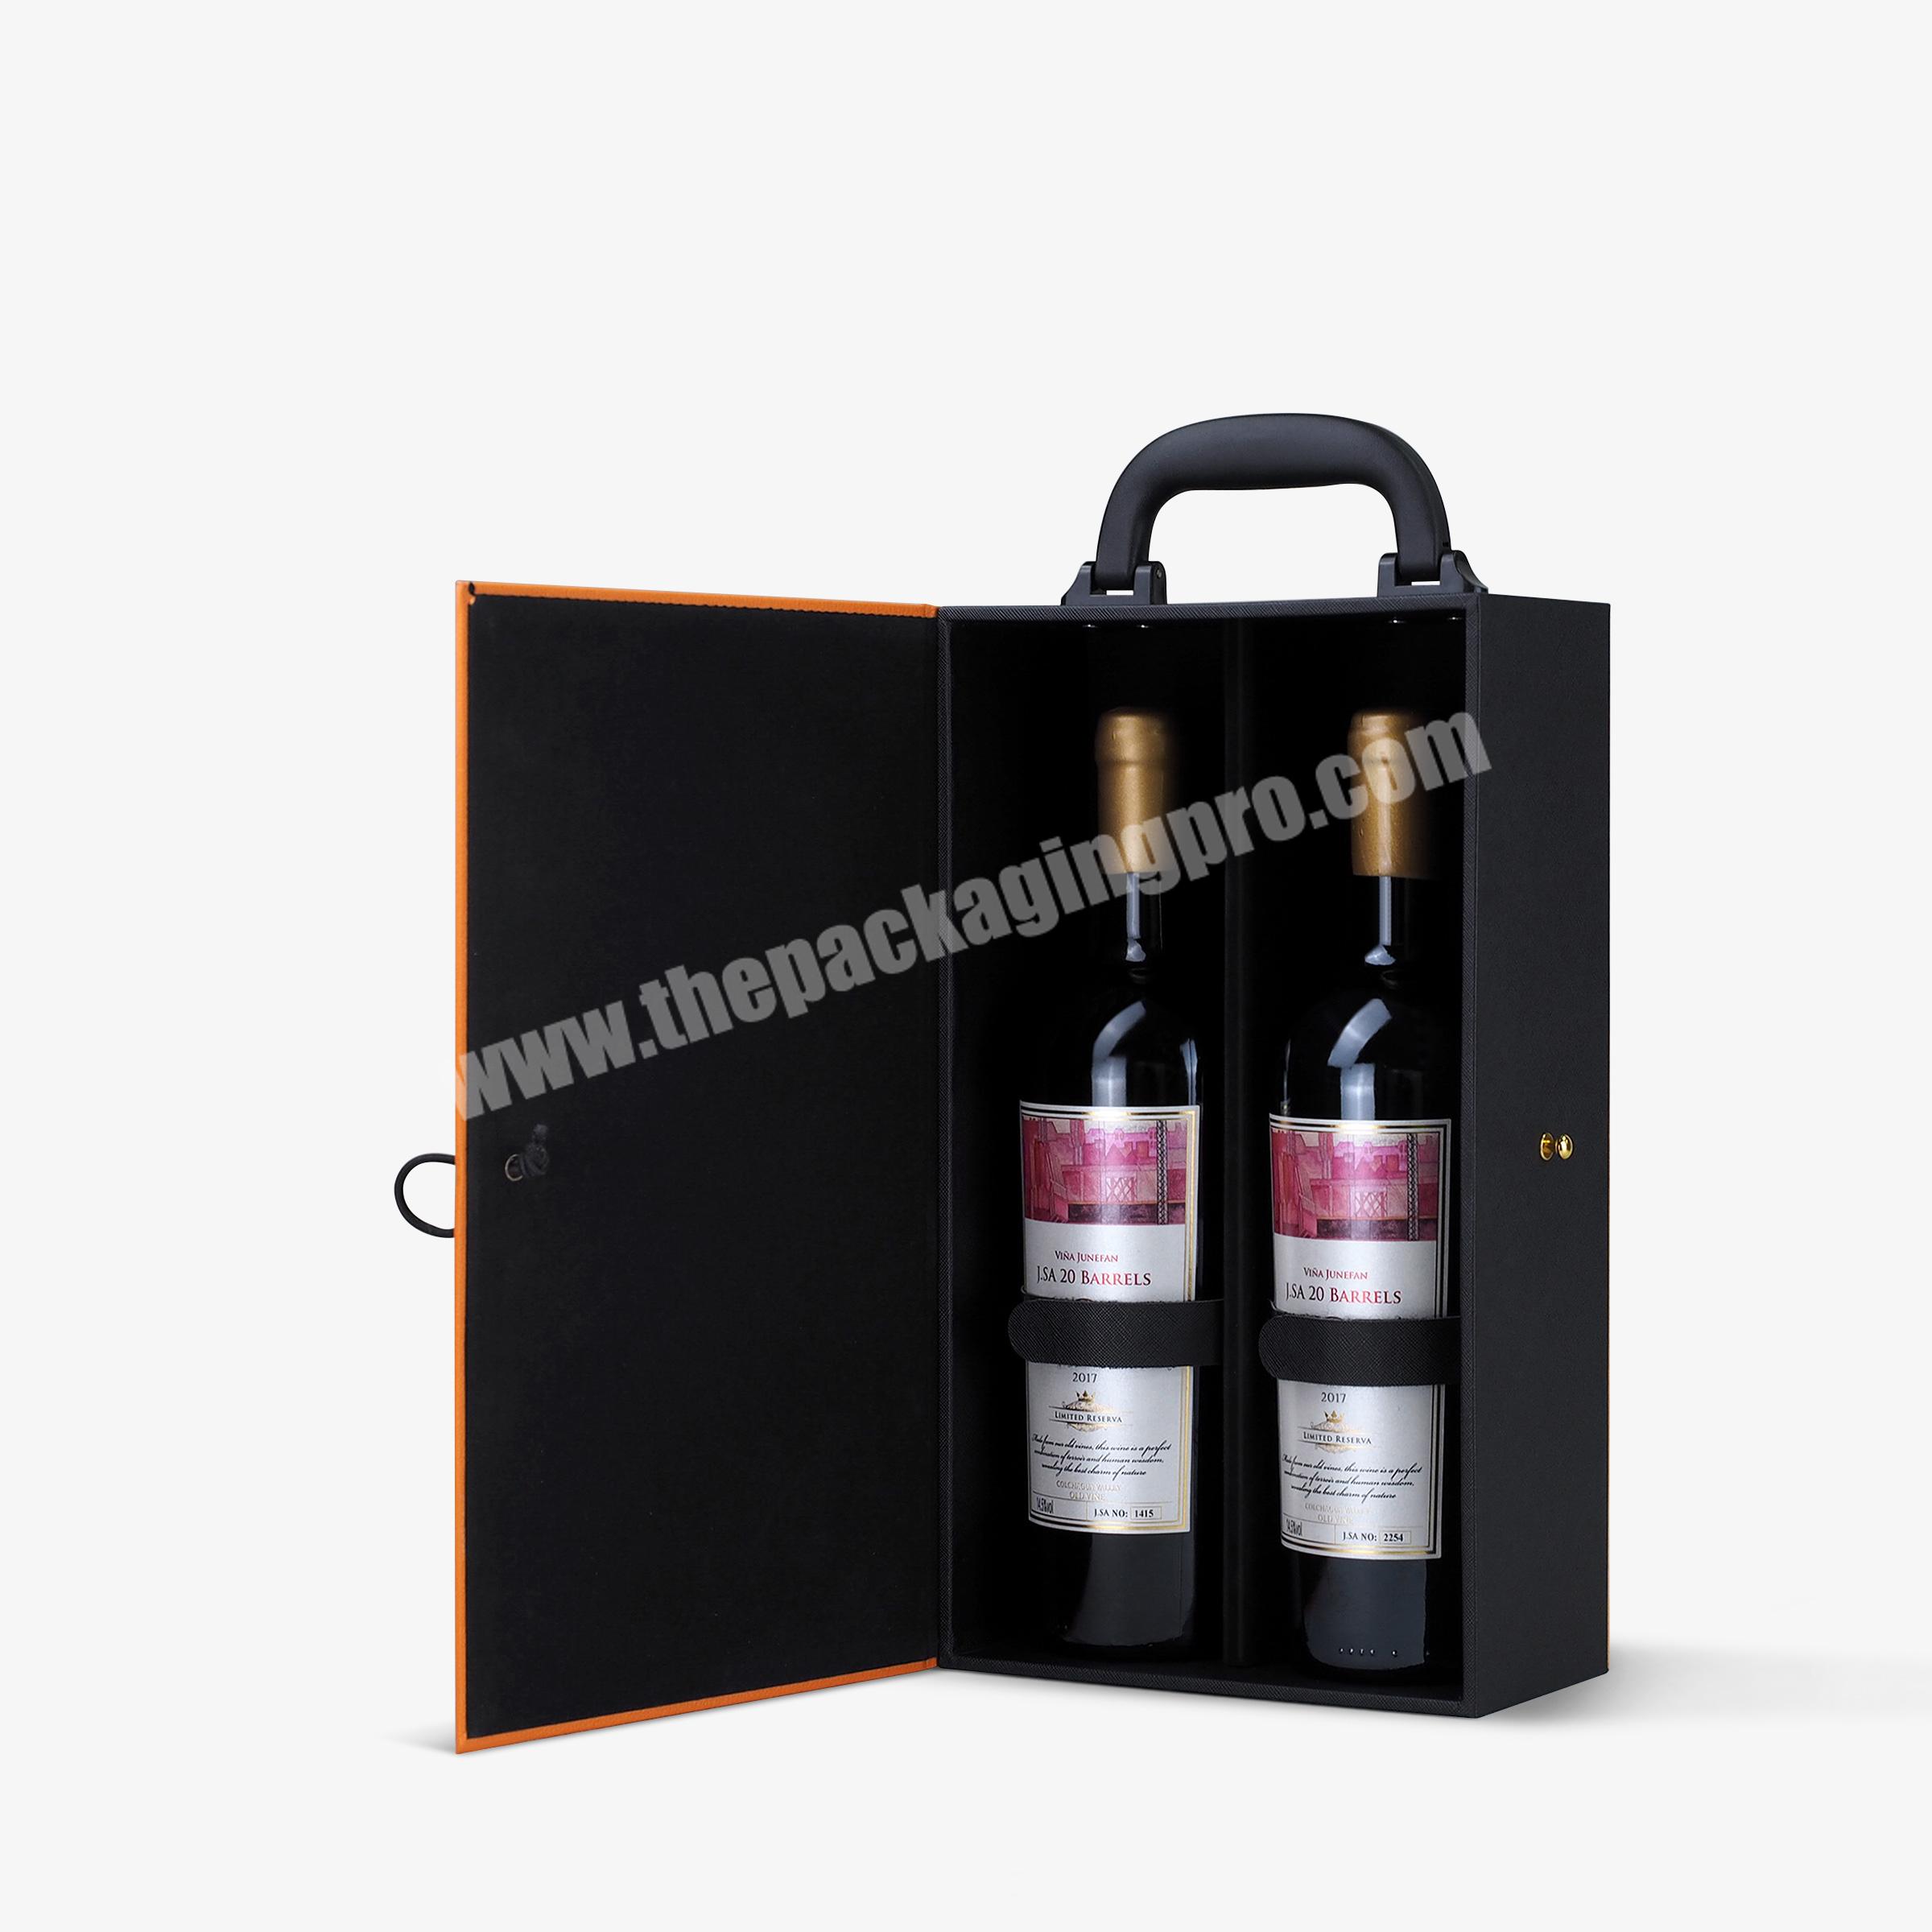 OEM good price luxury wine box wine gift box personalised packaging for wine bottle